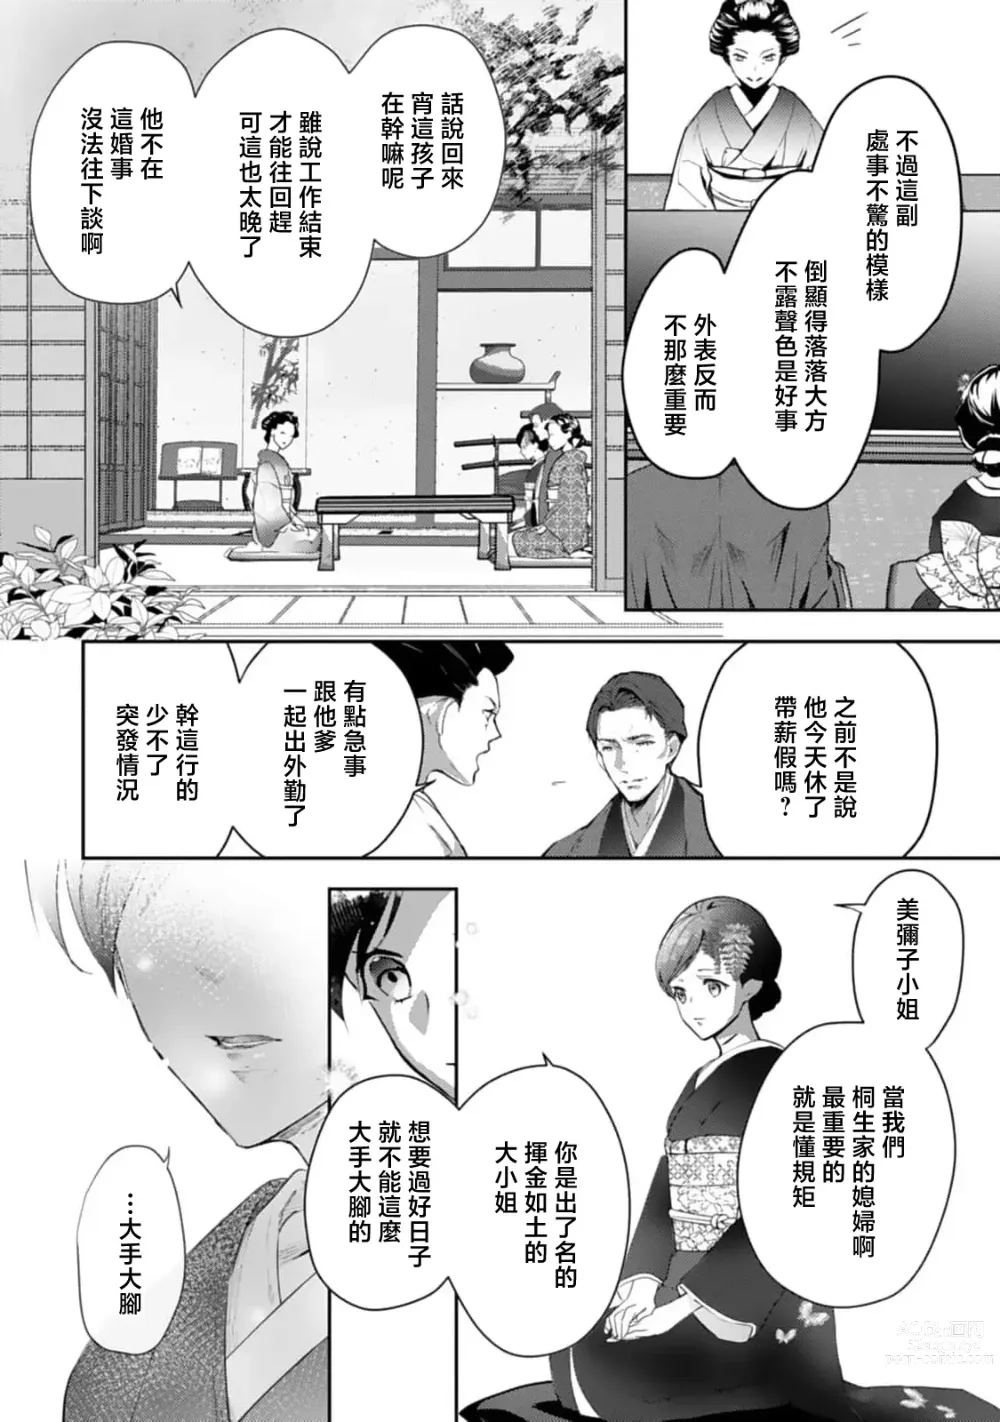 Page 7 of manga 怀旧浪漫谭•替身新娘嫁对制服郎